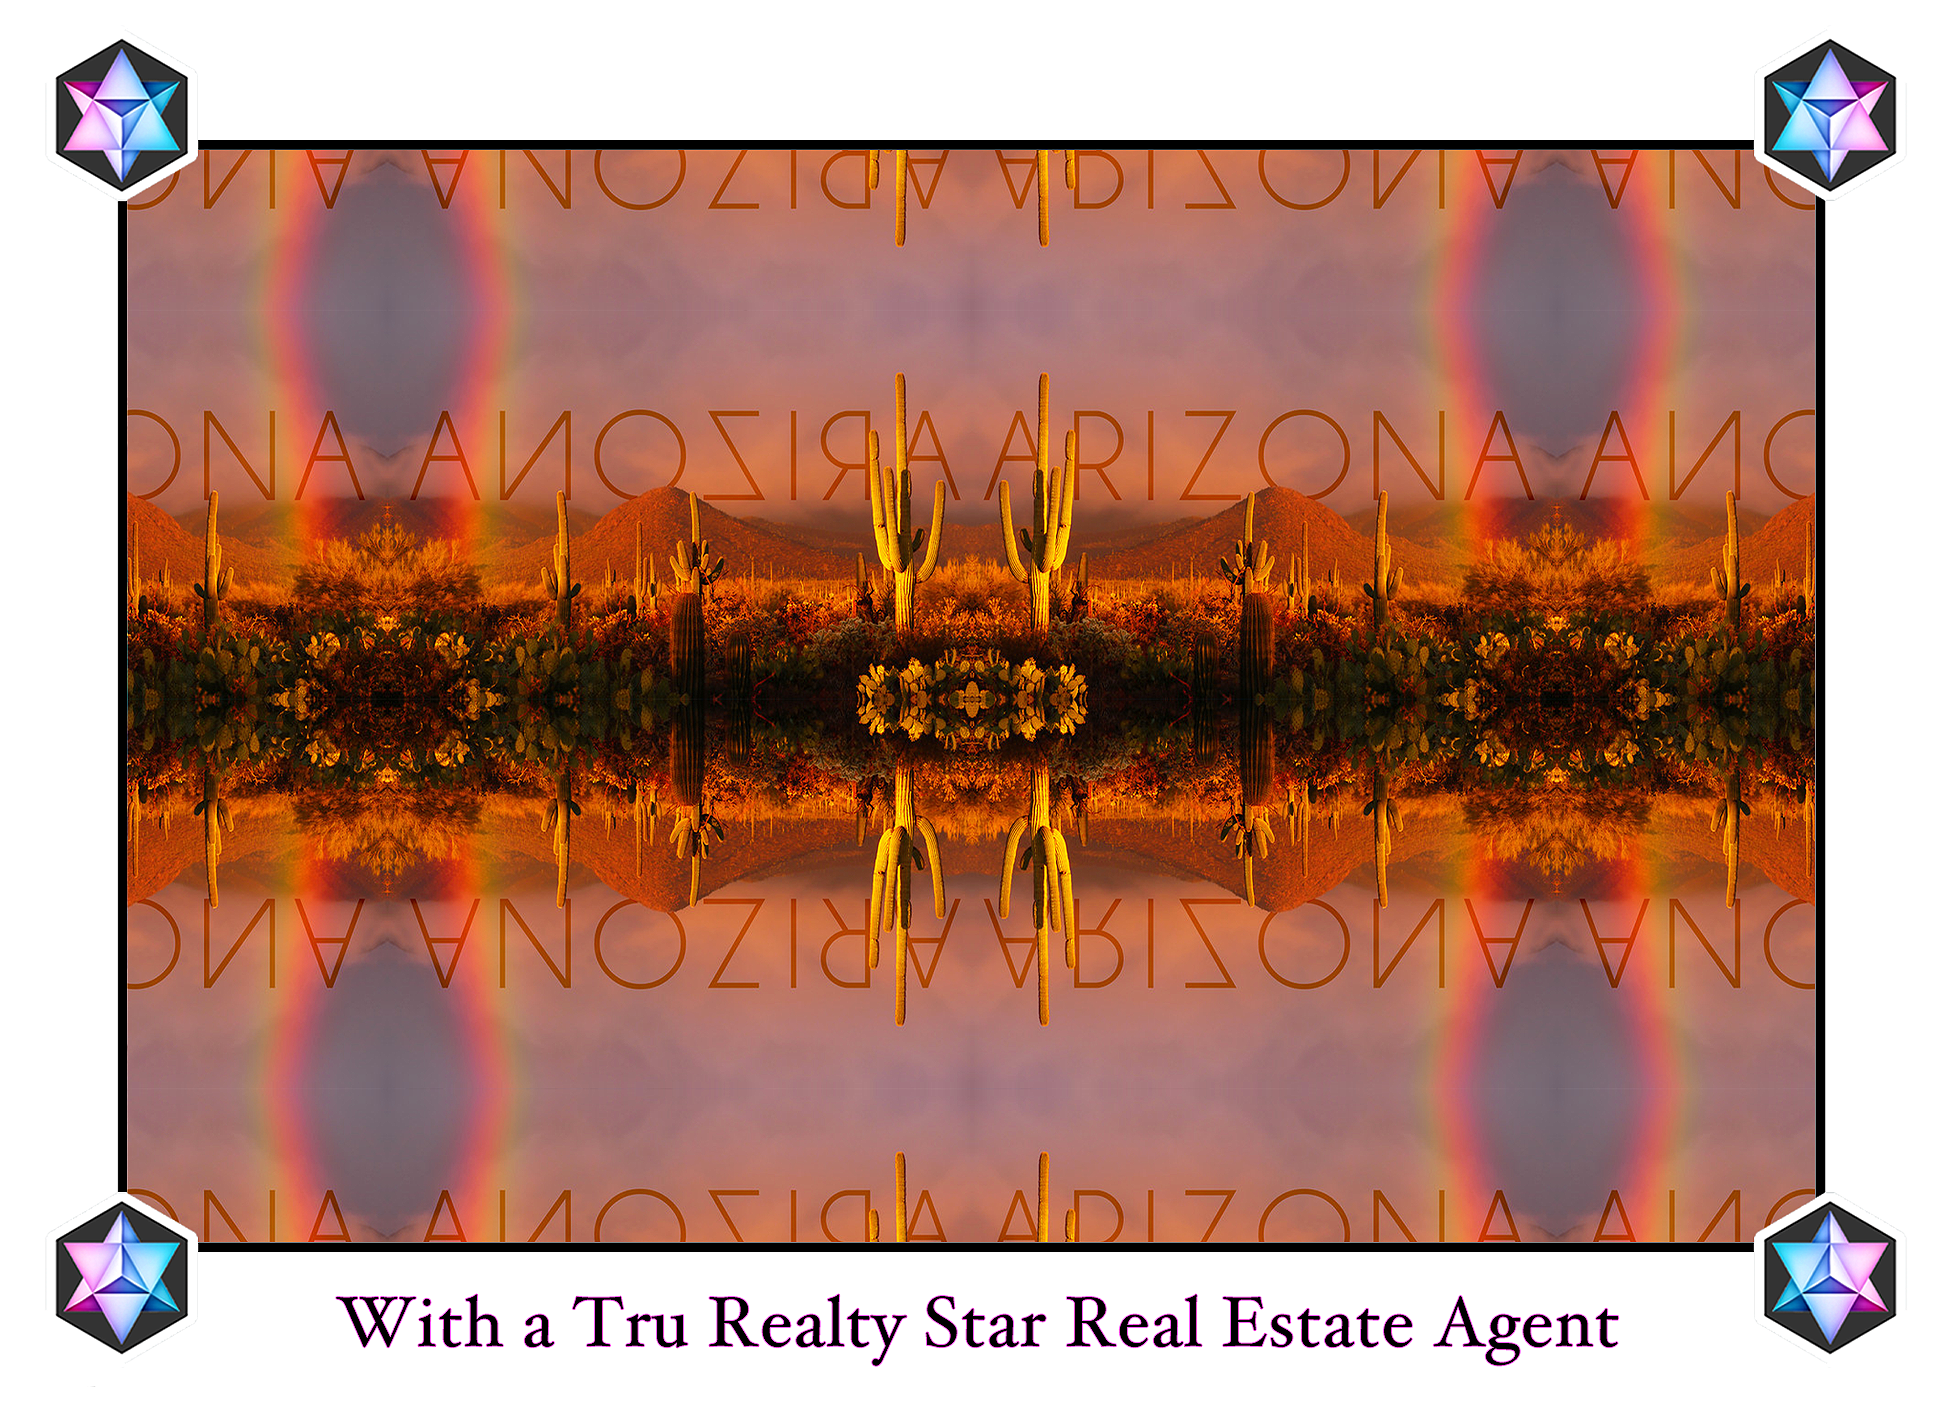 Kerry-Lee Glinski Draizin ~ Tru Realty Star Real Estate Agent